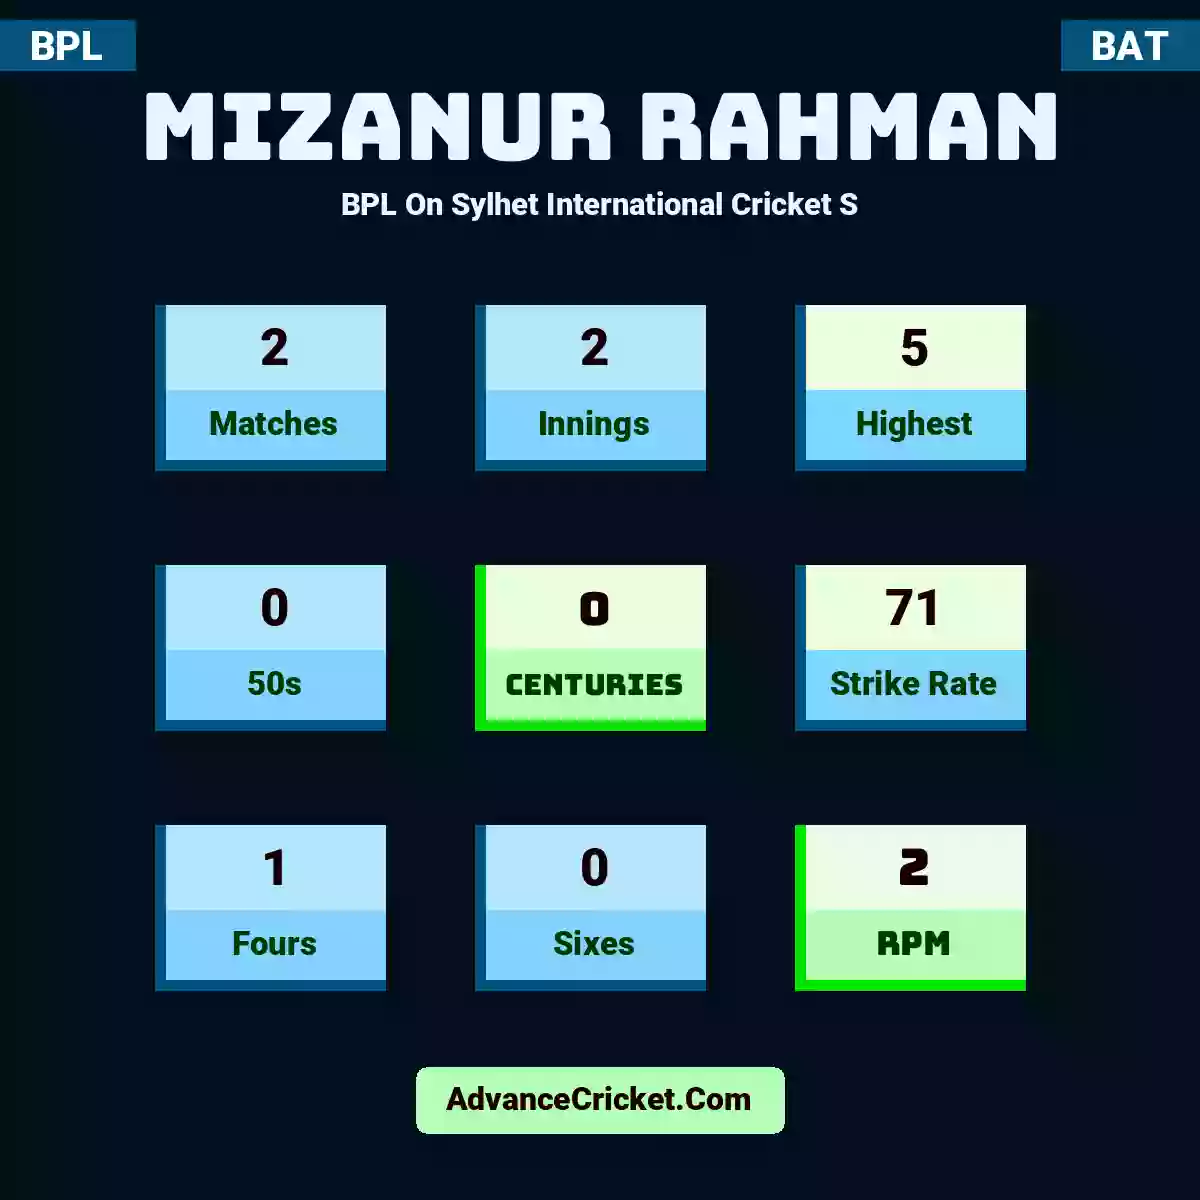 Mizanur Rahman BPL  On Sylhet International Cricket S, Mizanur Rahman played 2 matches, scored 5 runs as highest, 0 half-centuries, and 0 centuries, with a strike rate of 71. M.Rahman hit 1 fours and 0 sixes, with an RPM of 2.